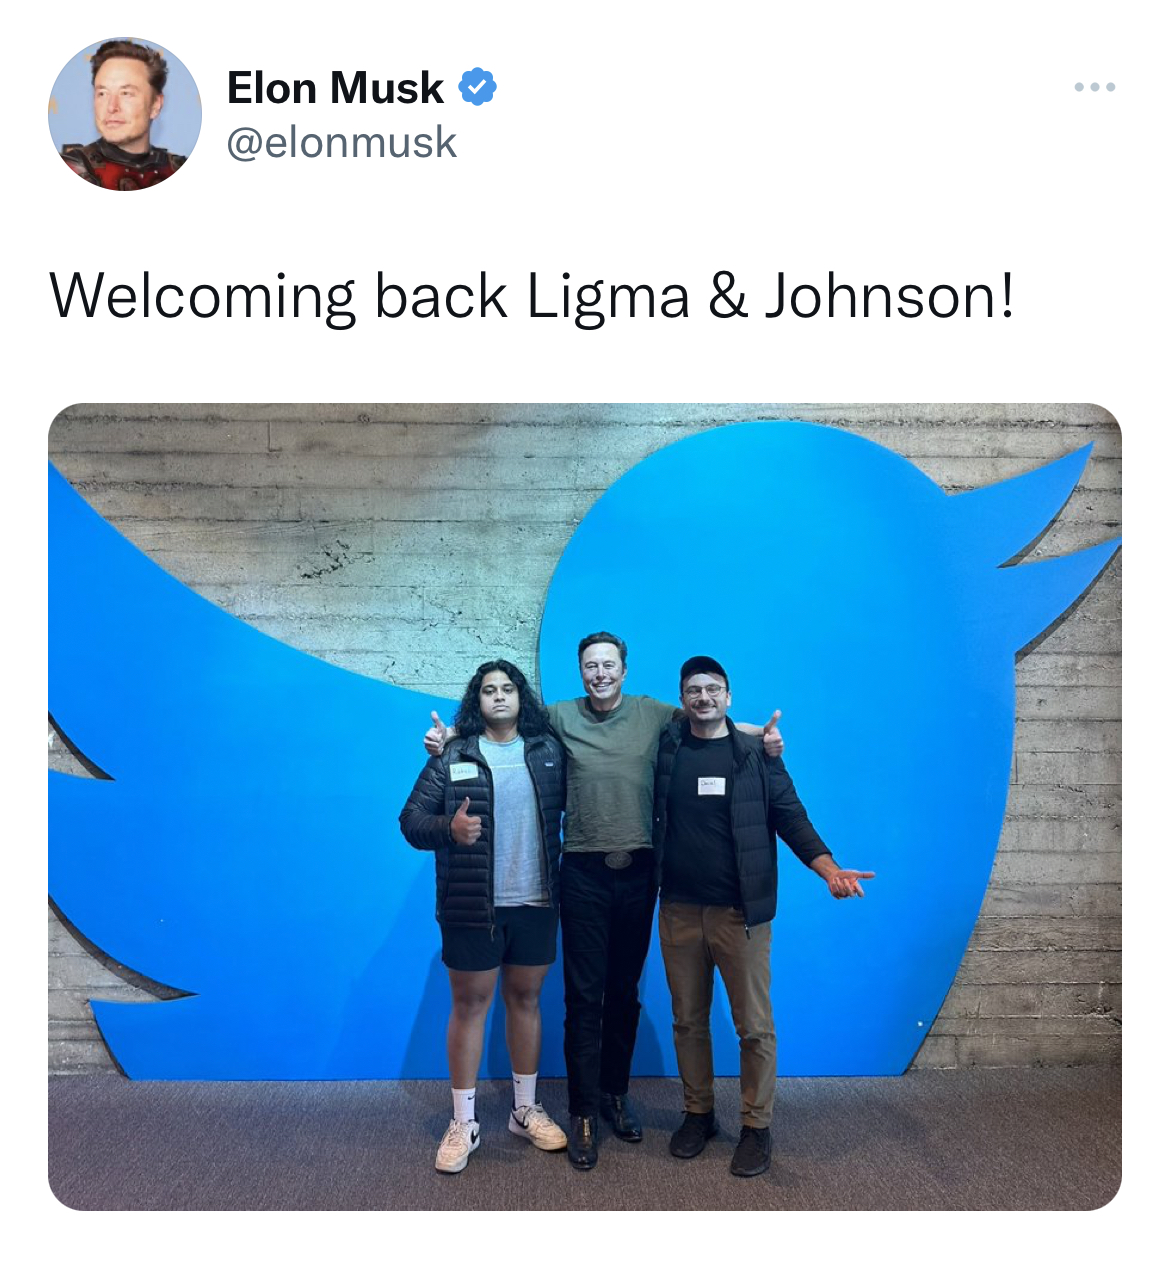 Tweets dunking on celebs - communication - Elon Musk Welcoming back Ligma & Johnson!